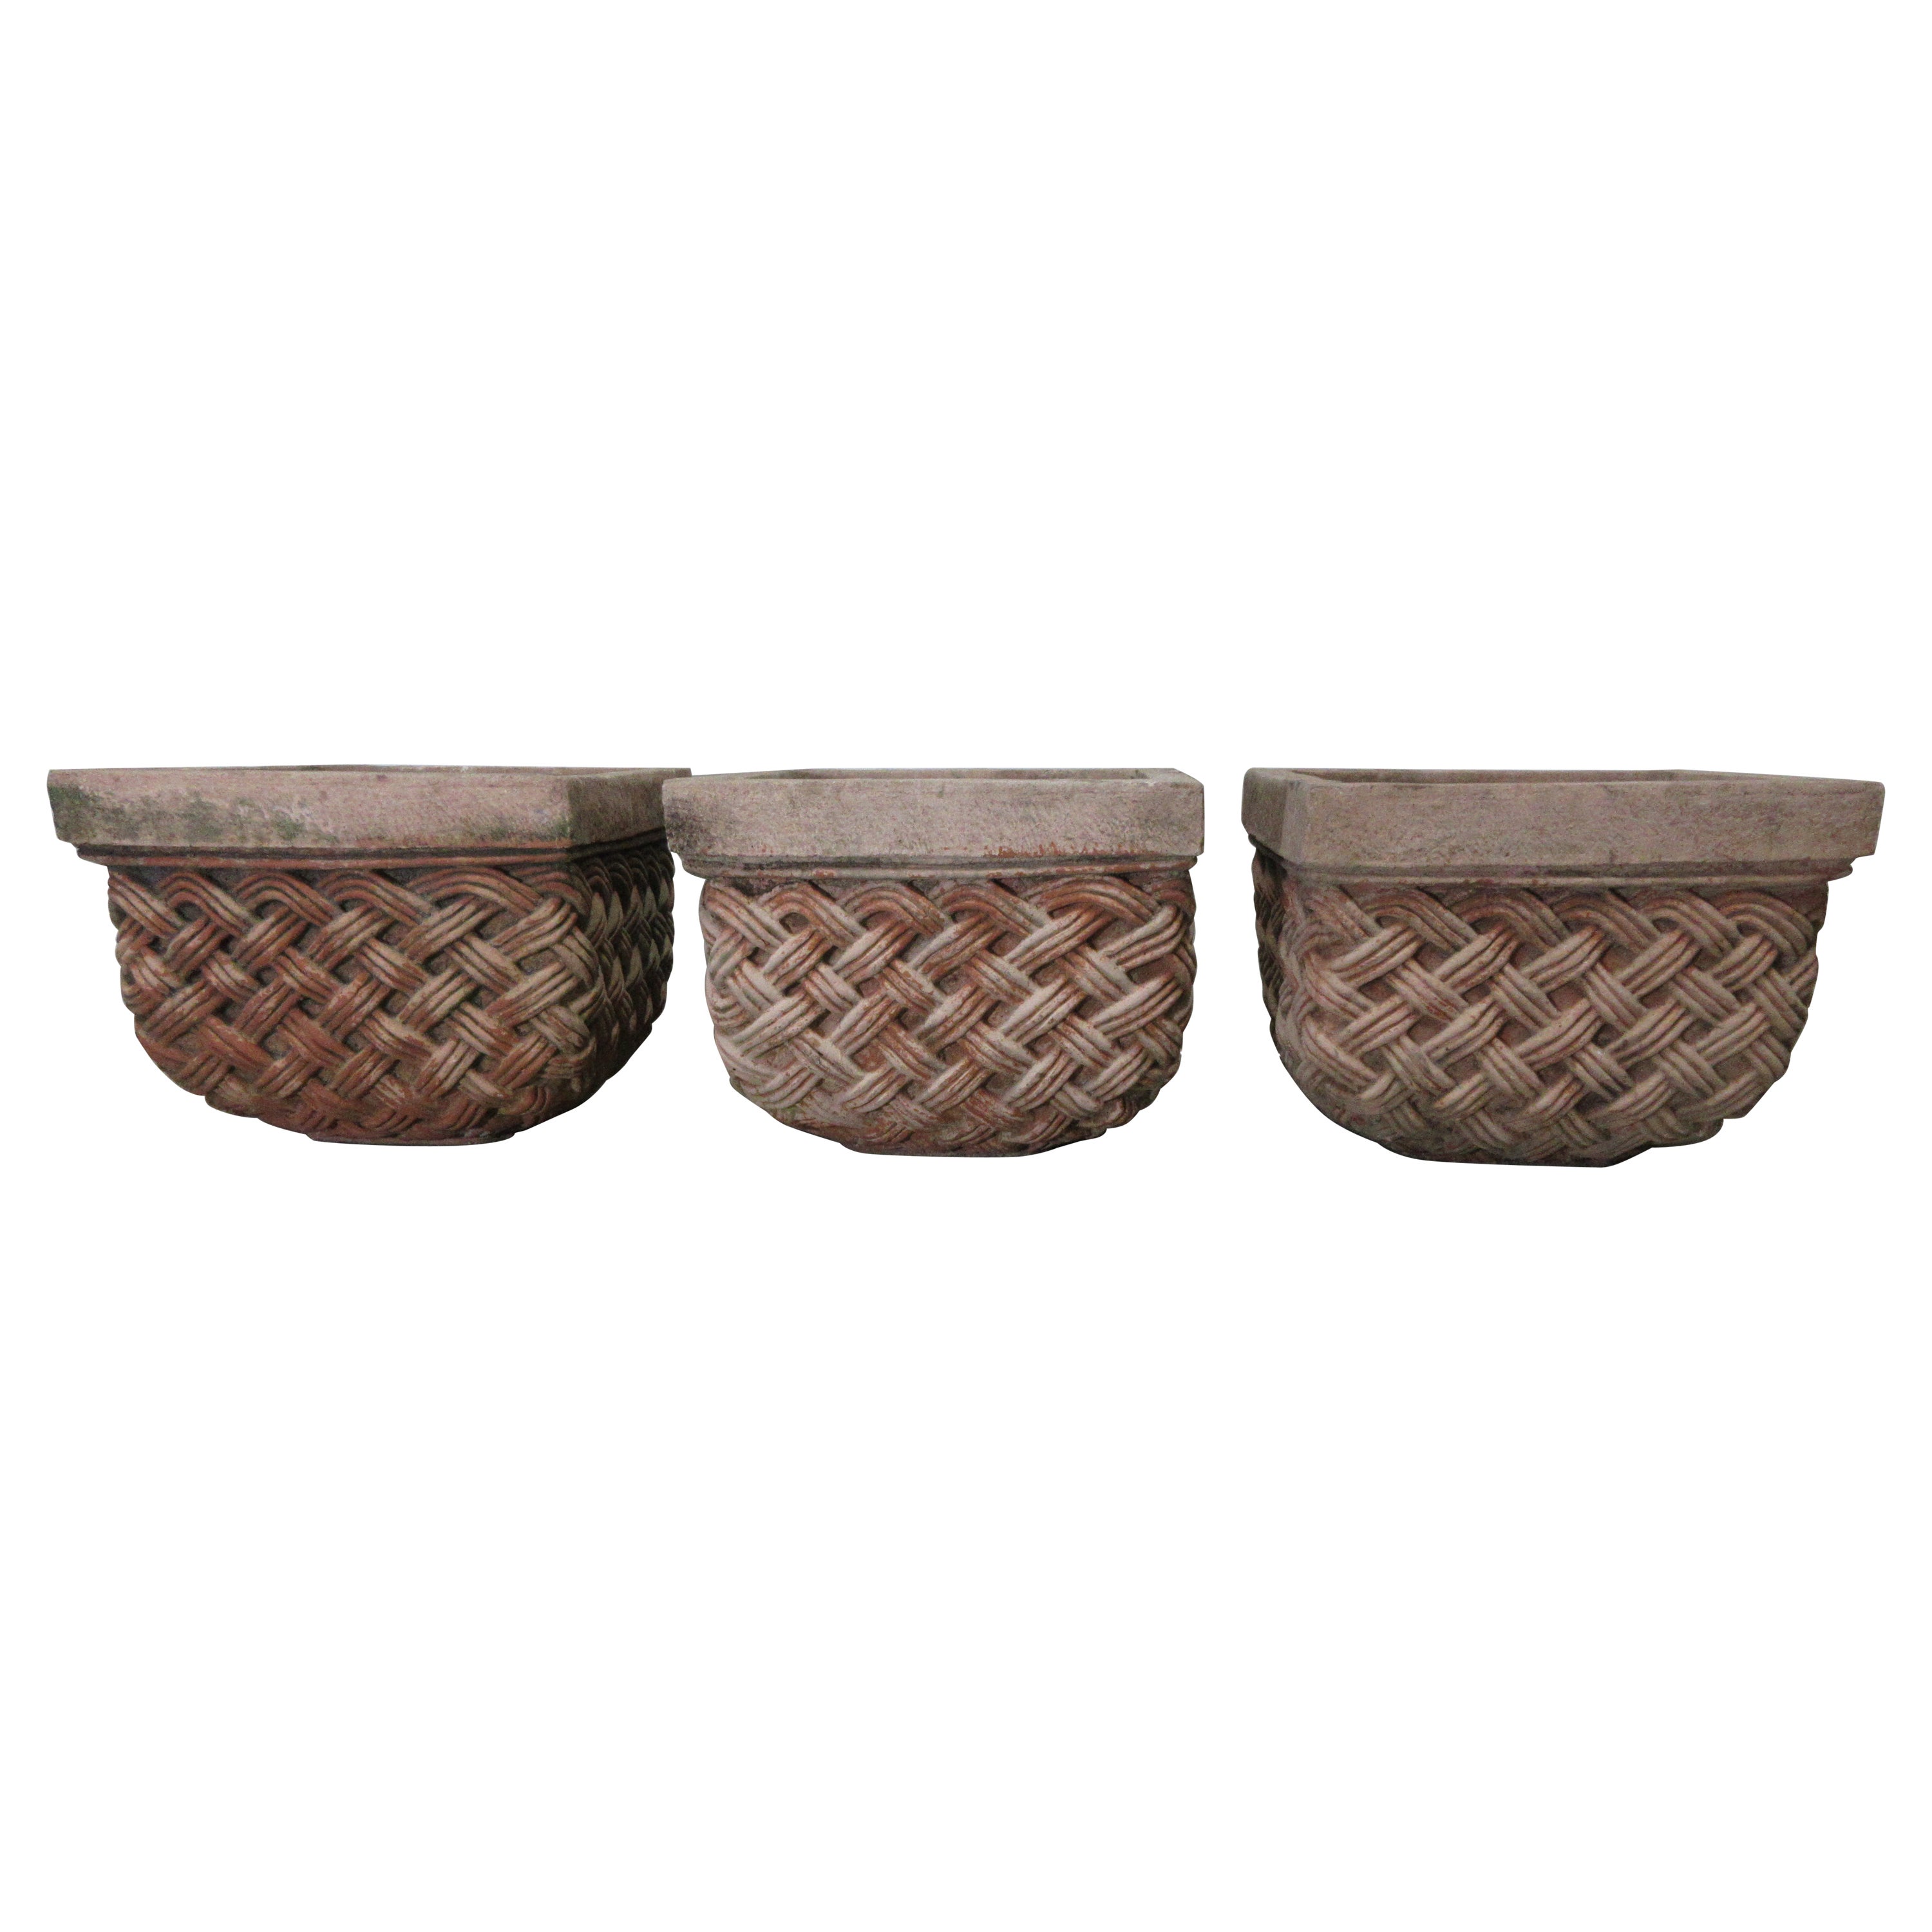 3 Basket Weave Planters For Sale